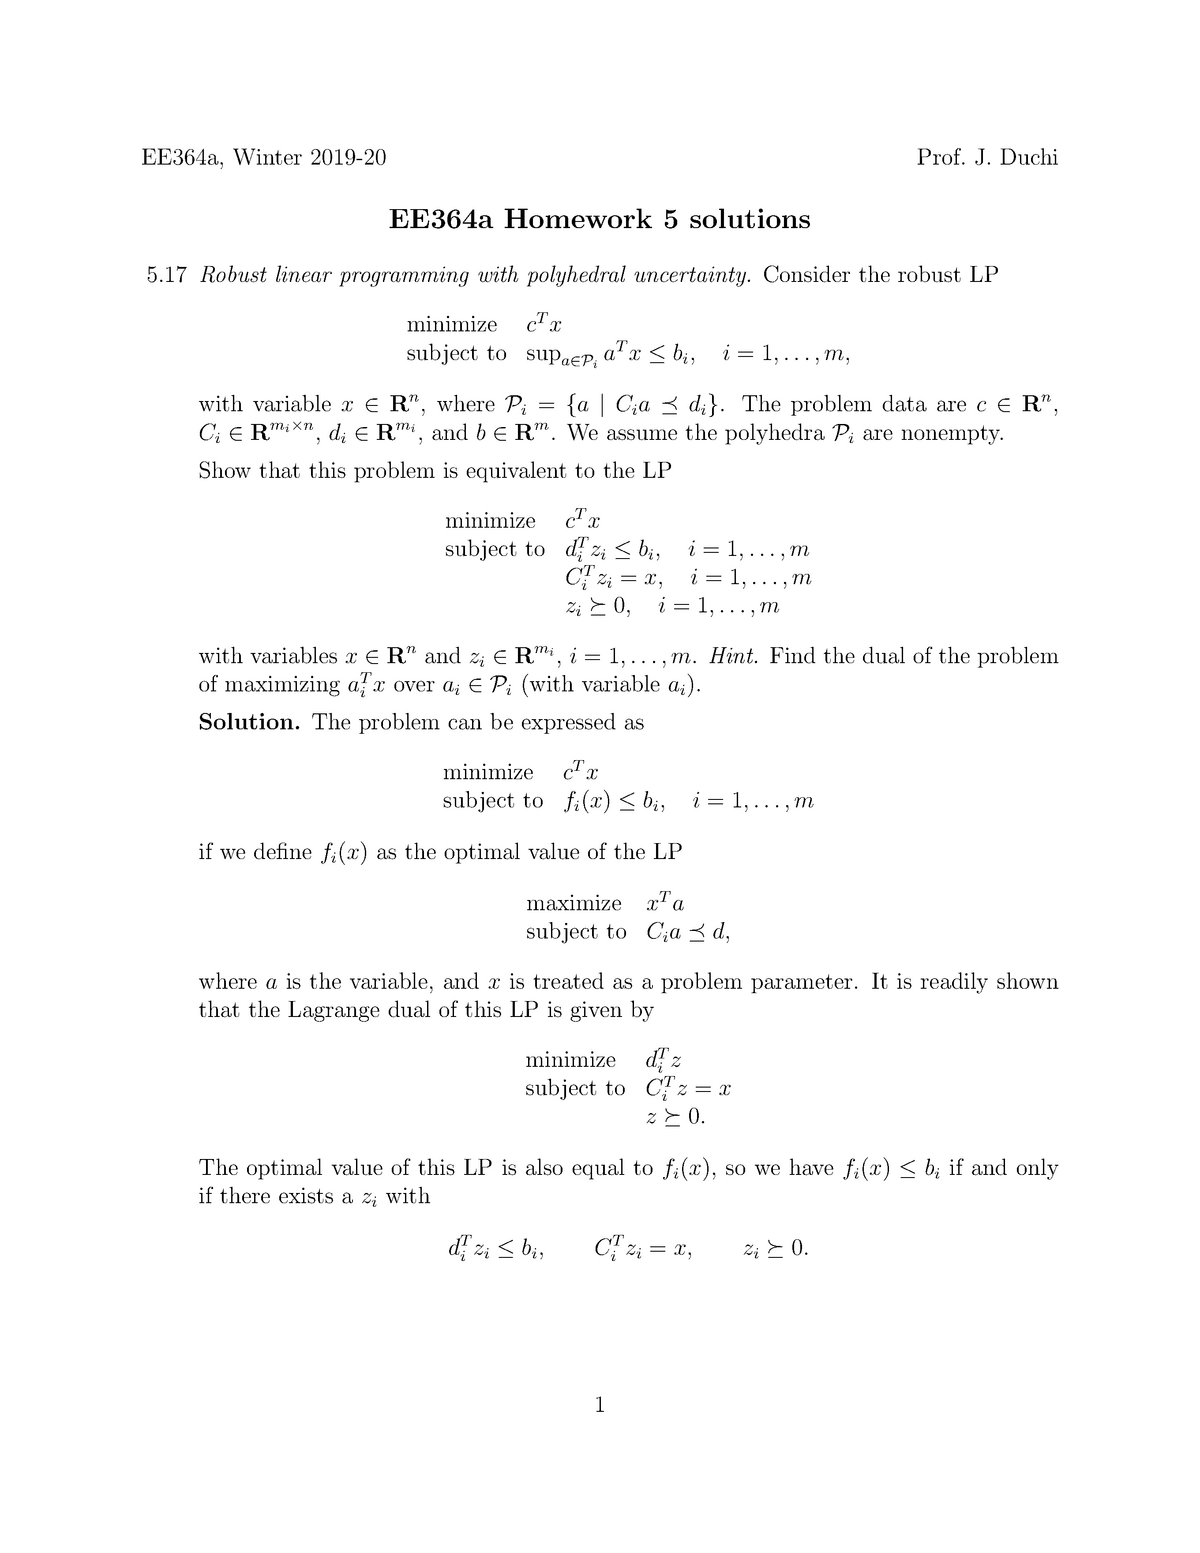 ee364a homework 5 solutions